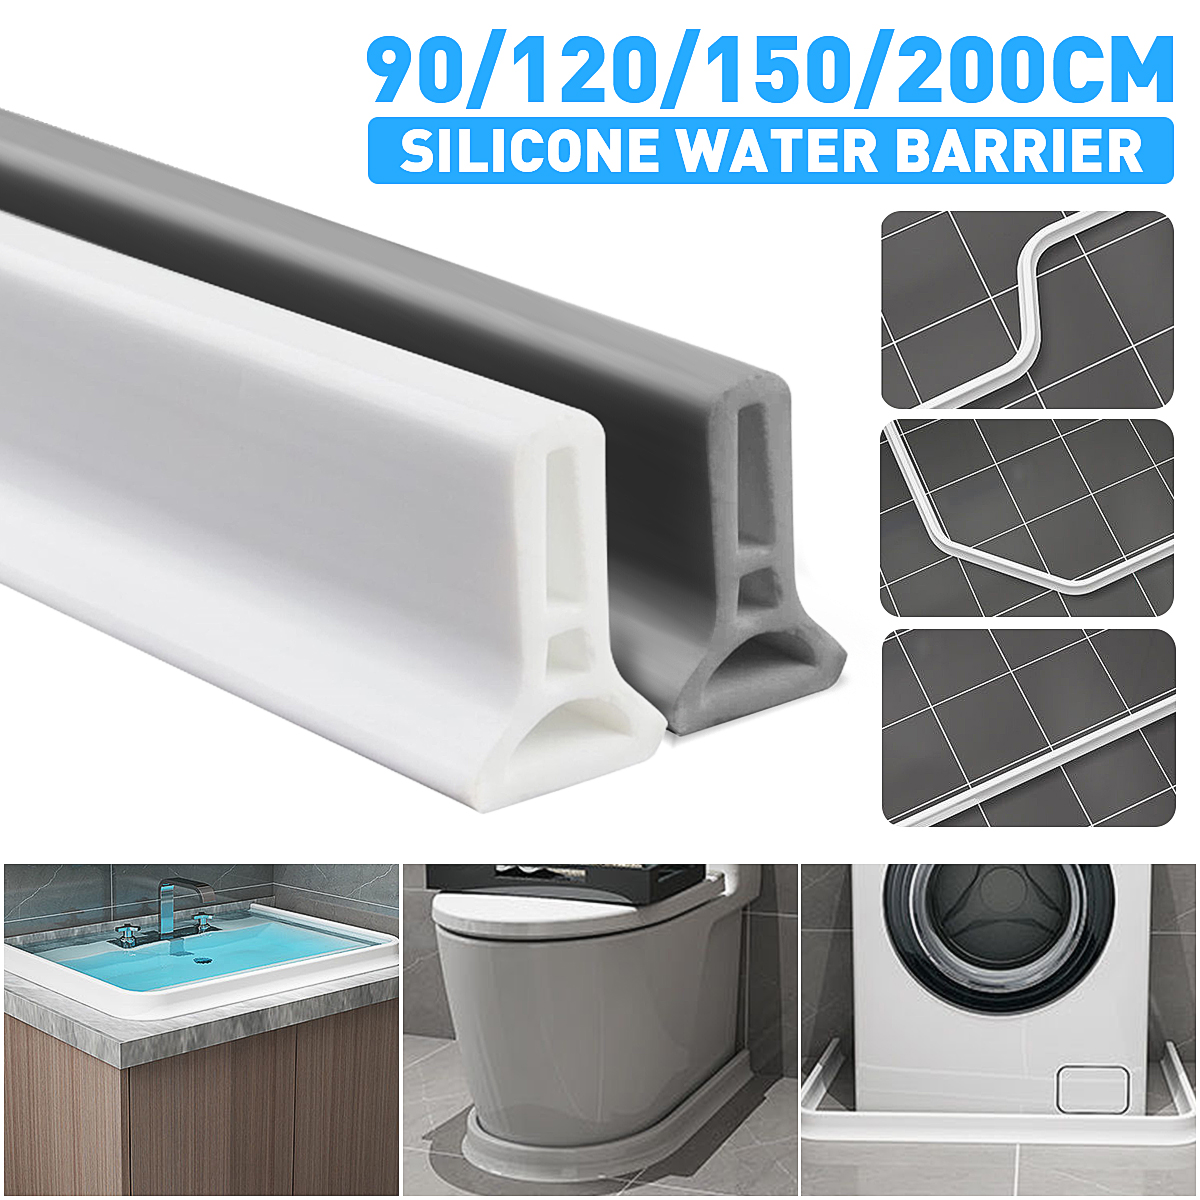 Bathroom-Water-Stopper-Flood-Barrier-Silicon-Water-Blocker-DryWet-Separation-1696662-1